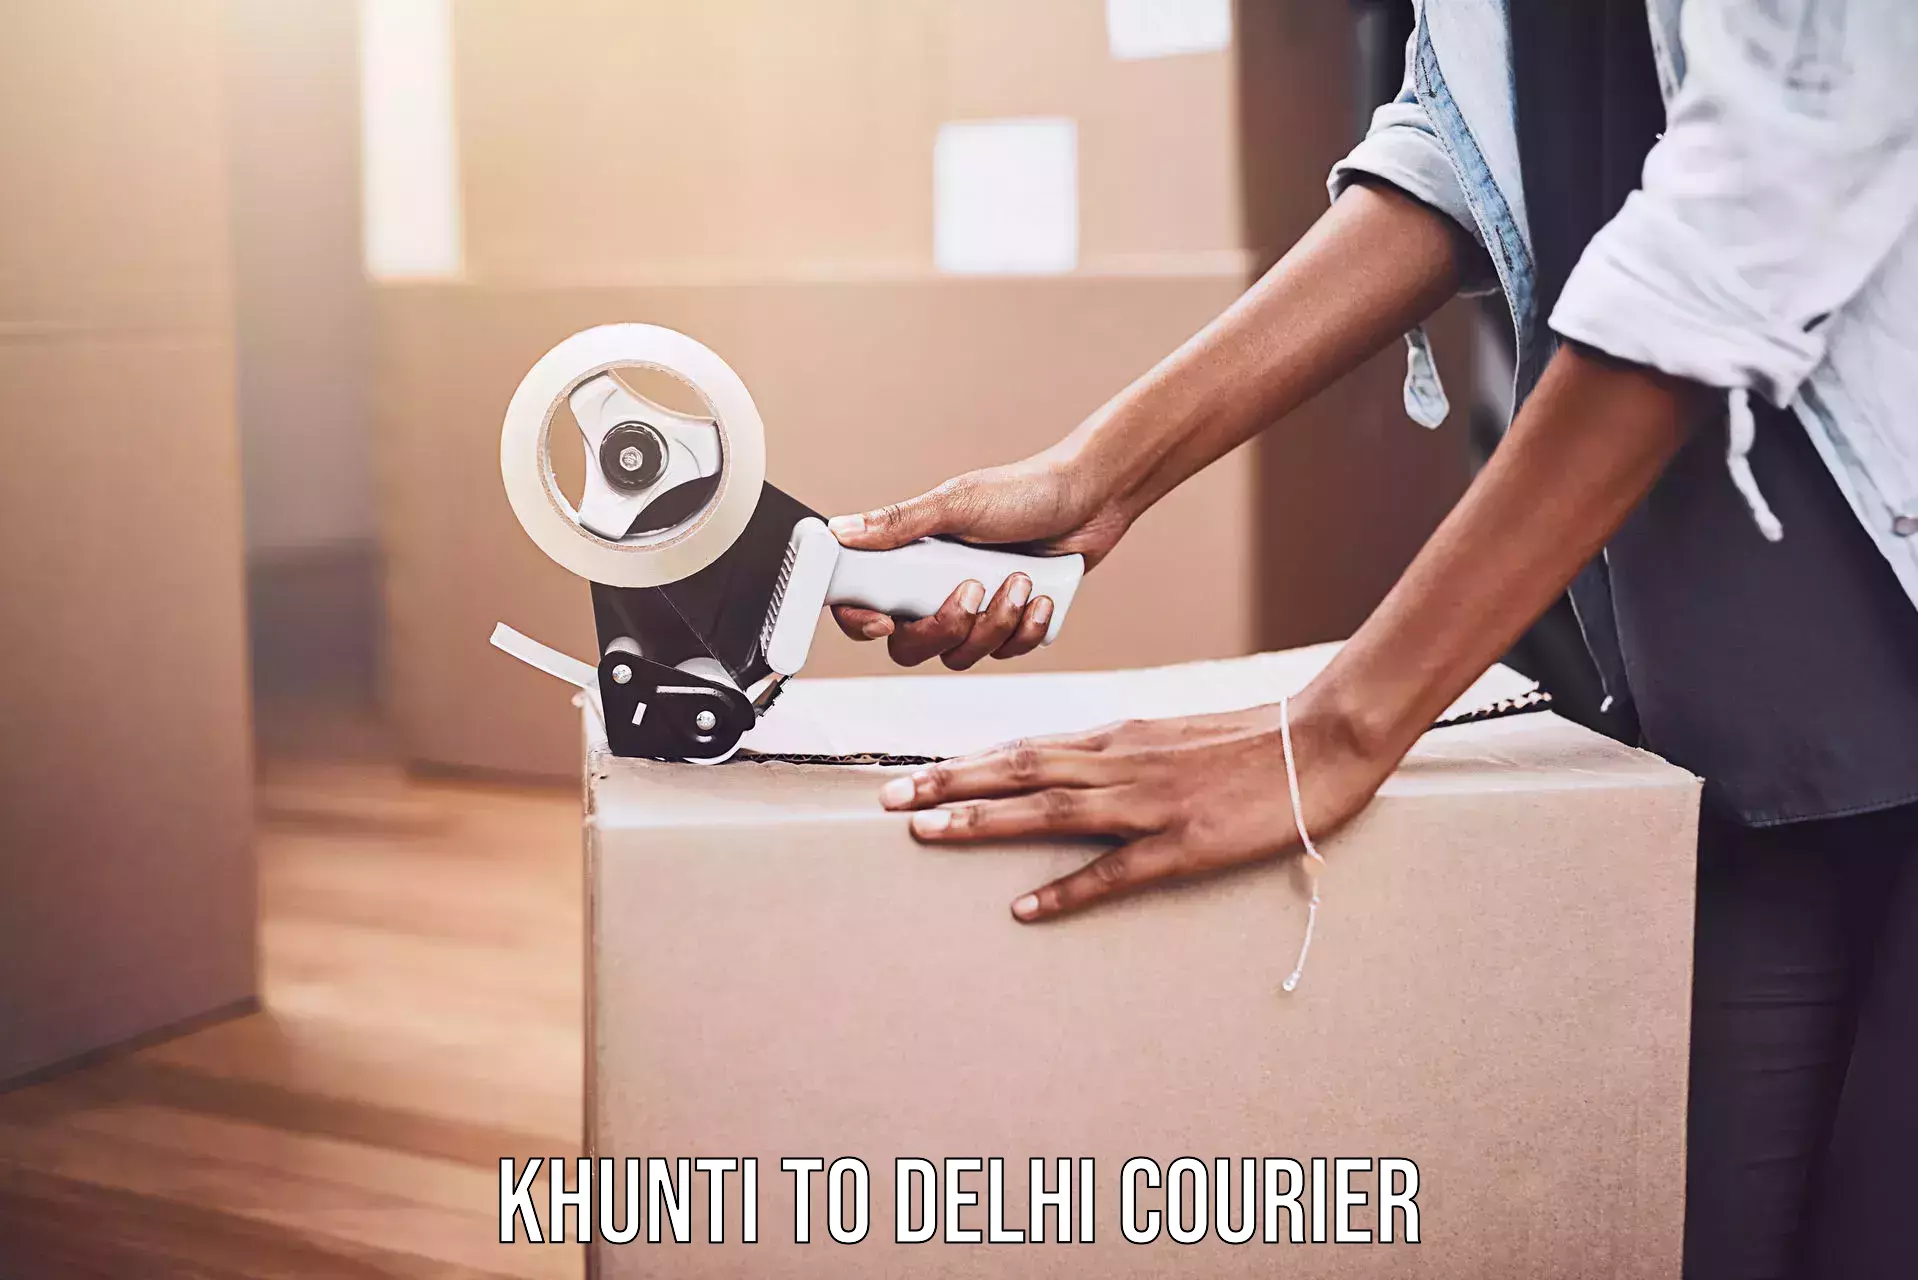 Fast delivery service Khunti to Delhi